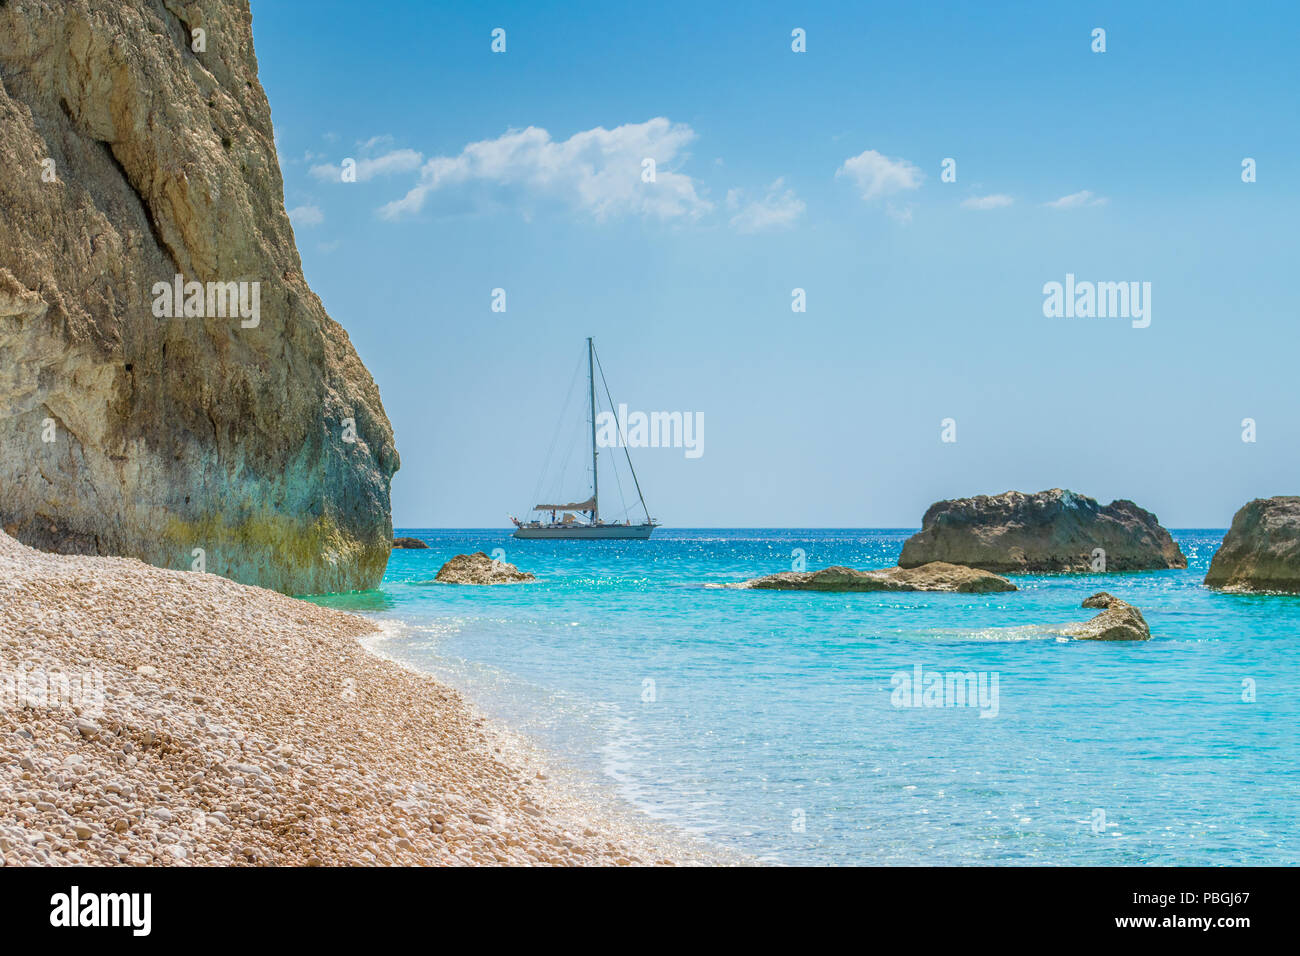 A boat is sailing into the turquoise sea waters of Porto katsiki in Lefkada Ionian island in Greece Stock Photo